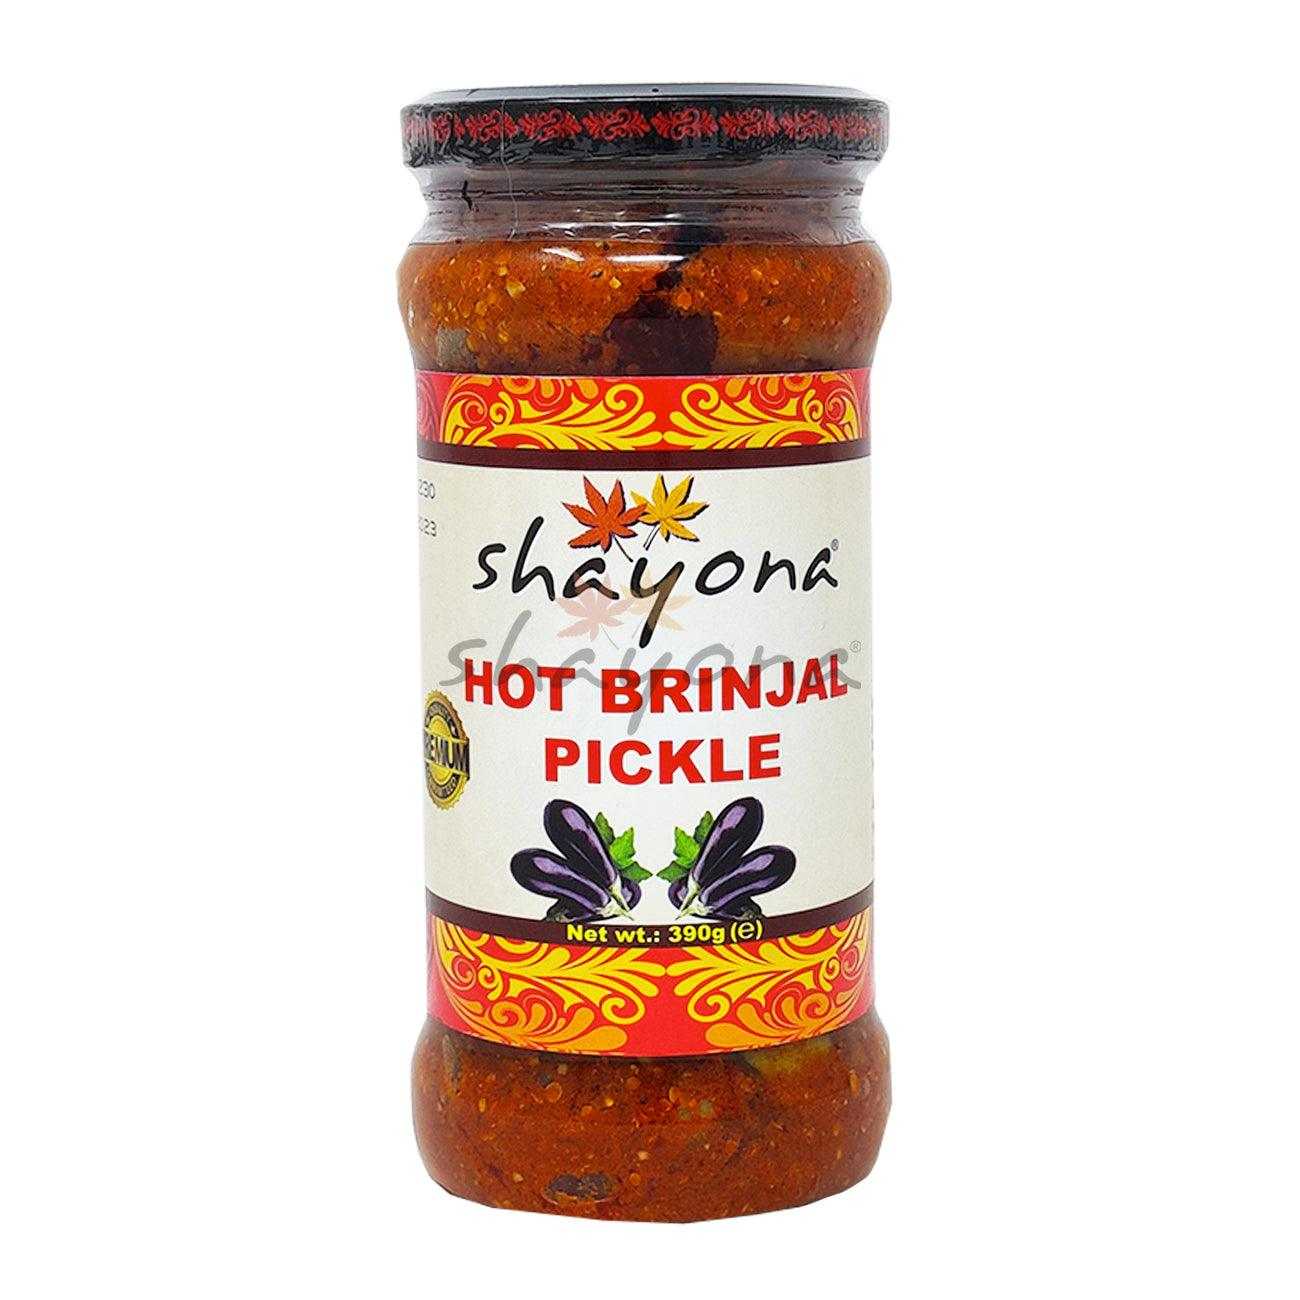 Shayona Hot Brinjal Pickle